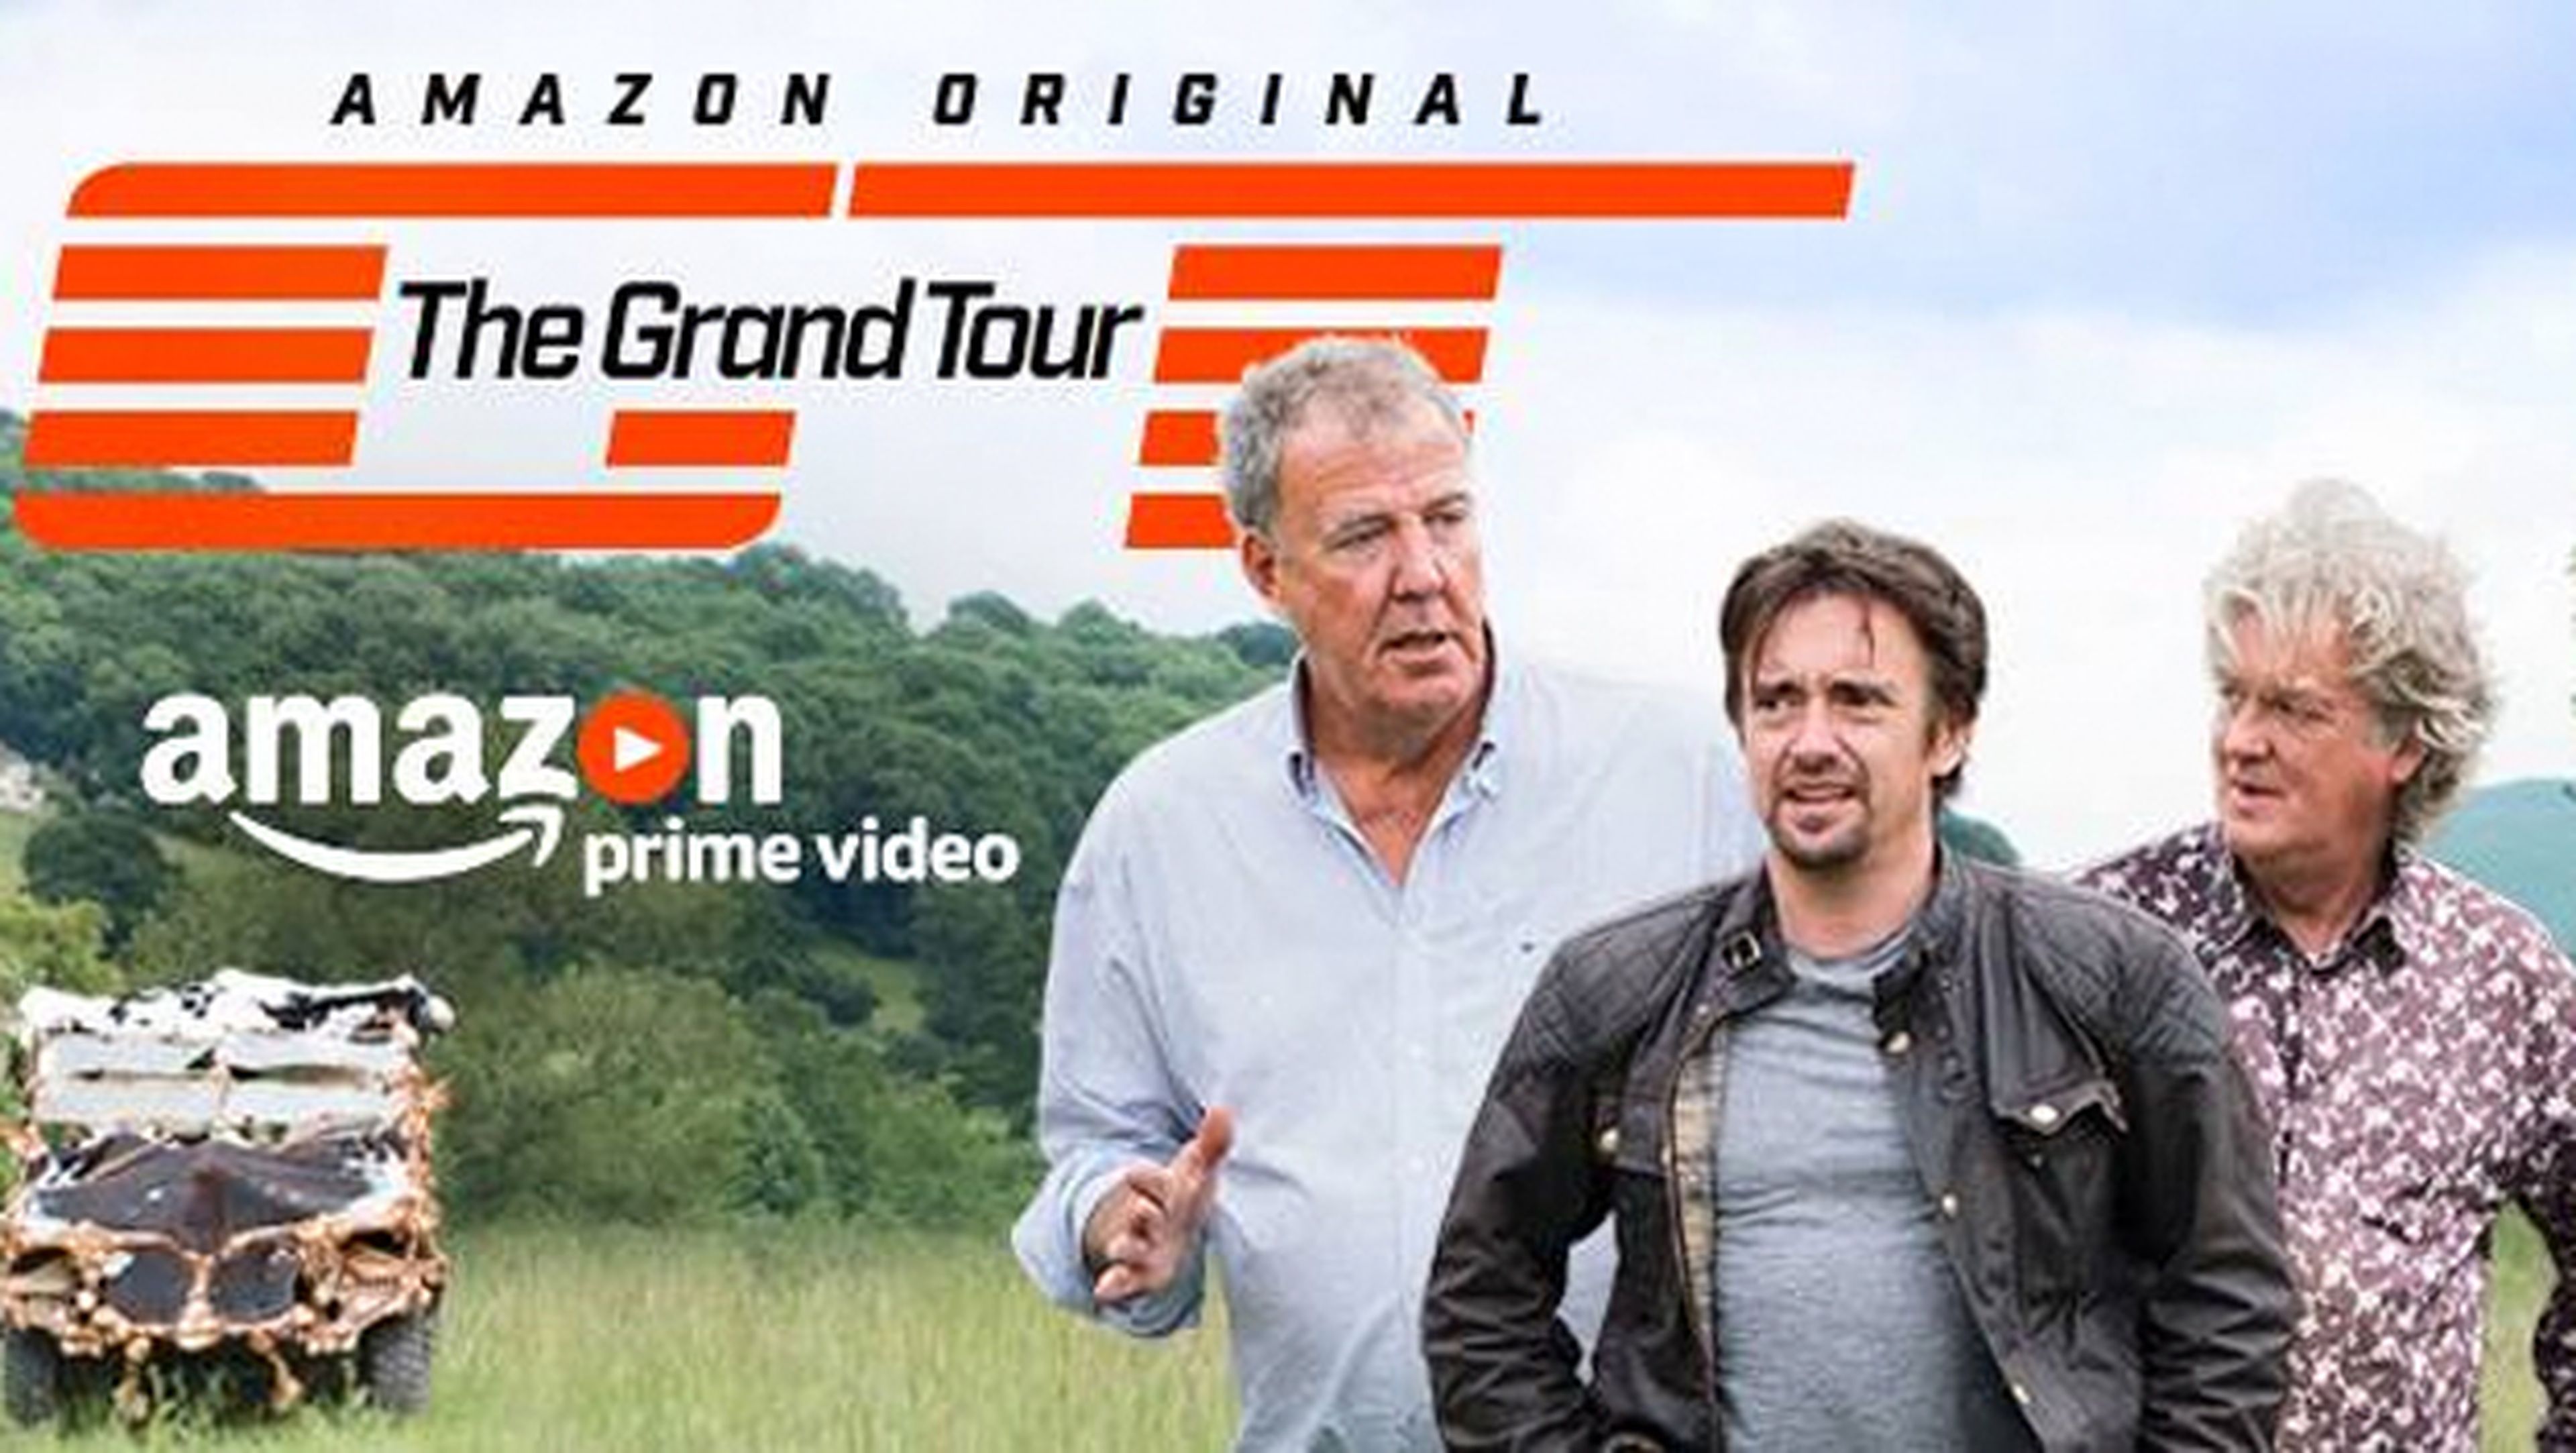 Cómo ver online gratis The Grand Tour de Amazon